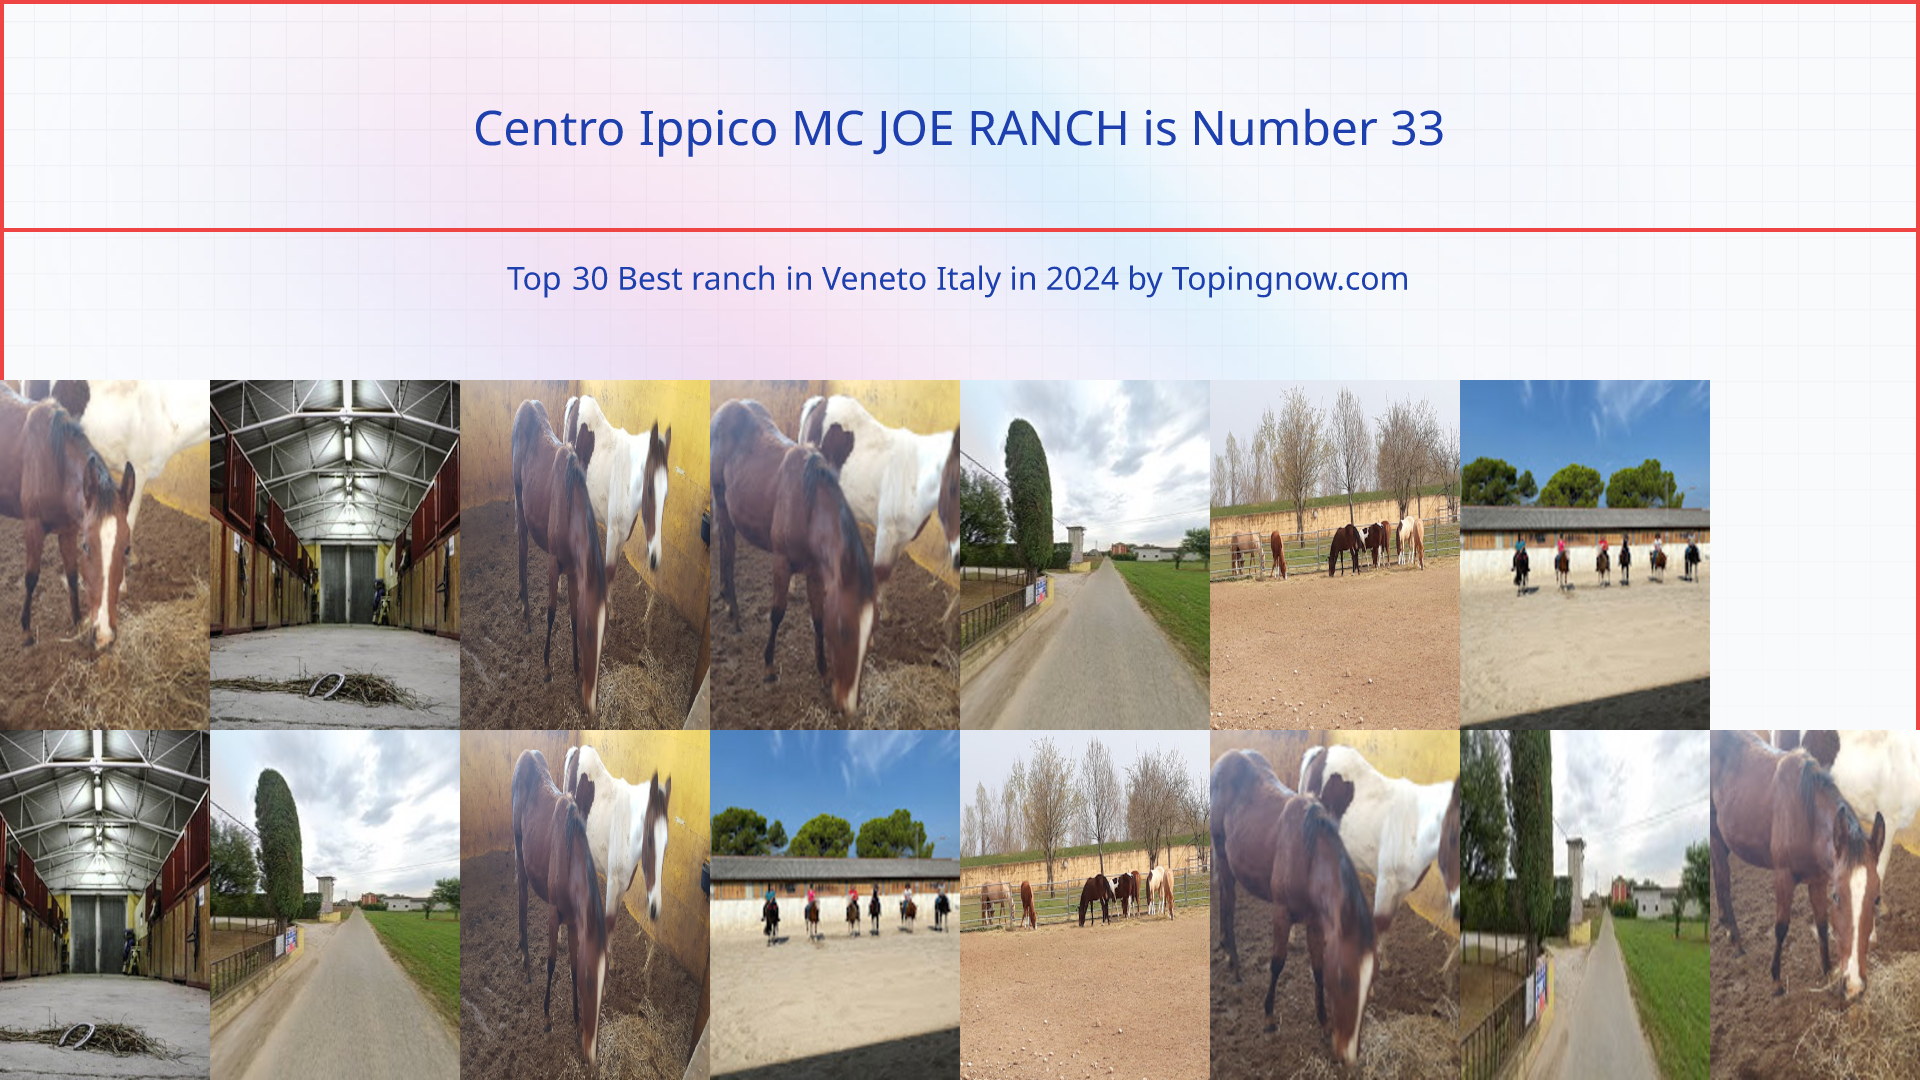 Centro Ippico MC JOE RANCH: Top 30 Best ranch in Veneto Italy in 2024